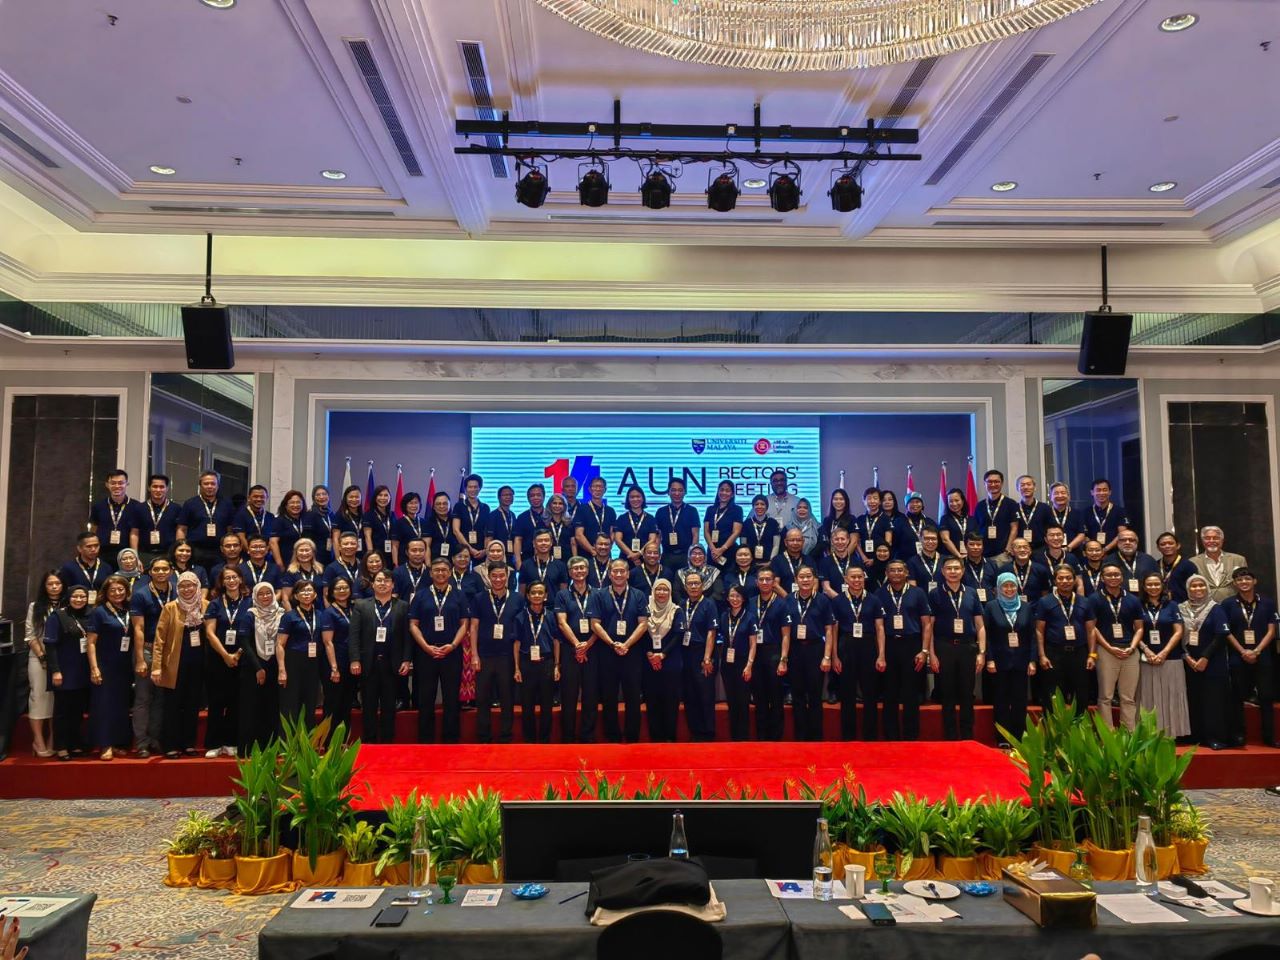 hadiri-the-14th-asean-university-network-rectors-meeting-di-malaysia-rektor-itb-jelaskan-konsep-multikampus-dan-multidisiplin